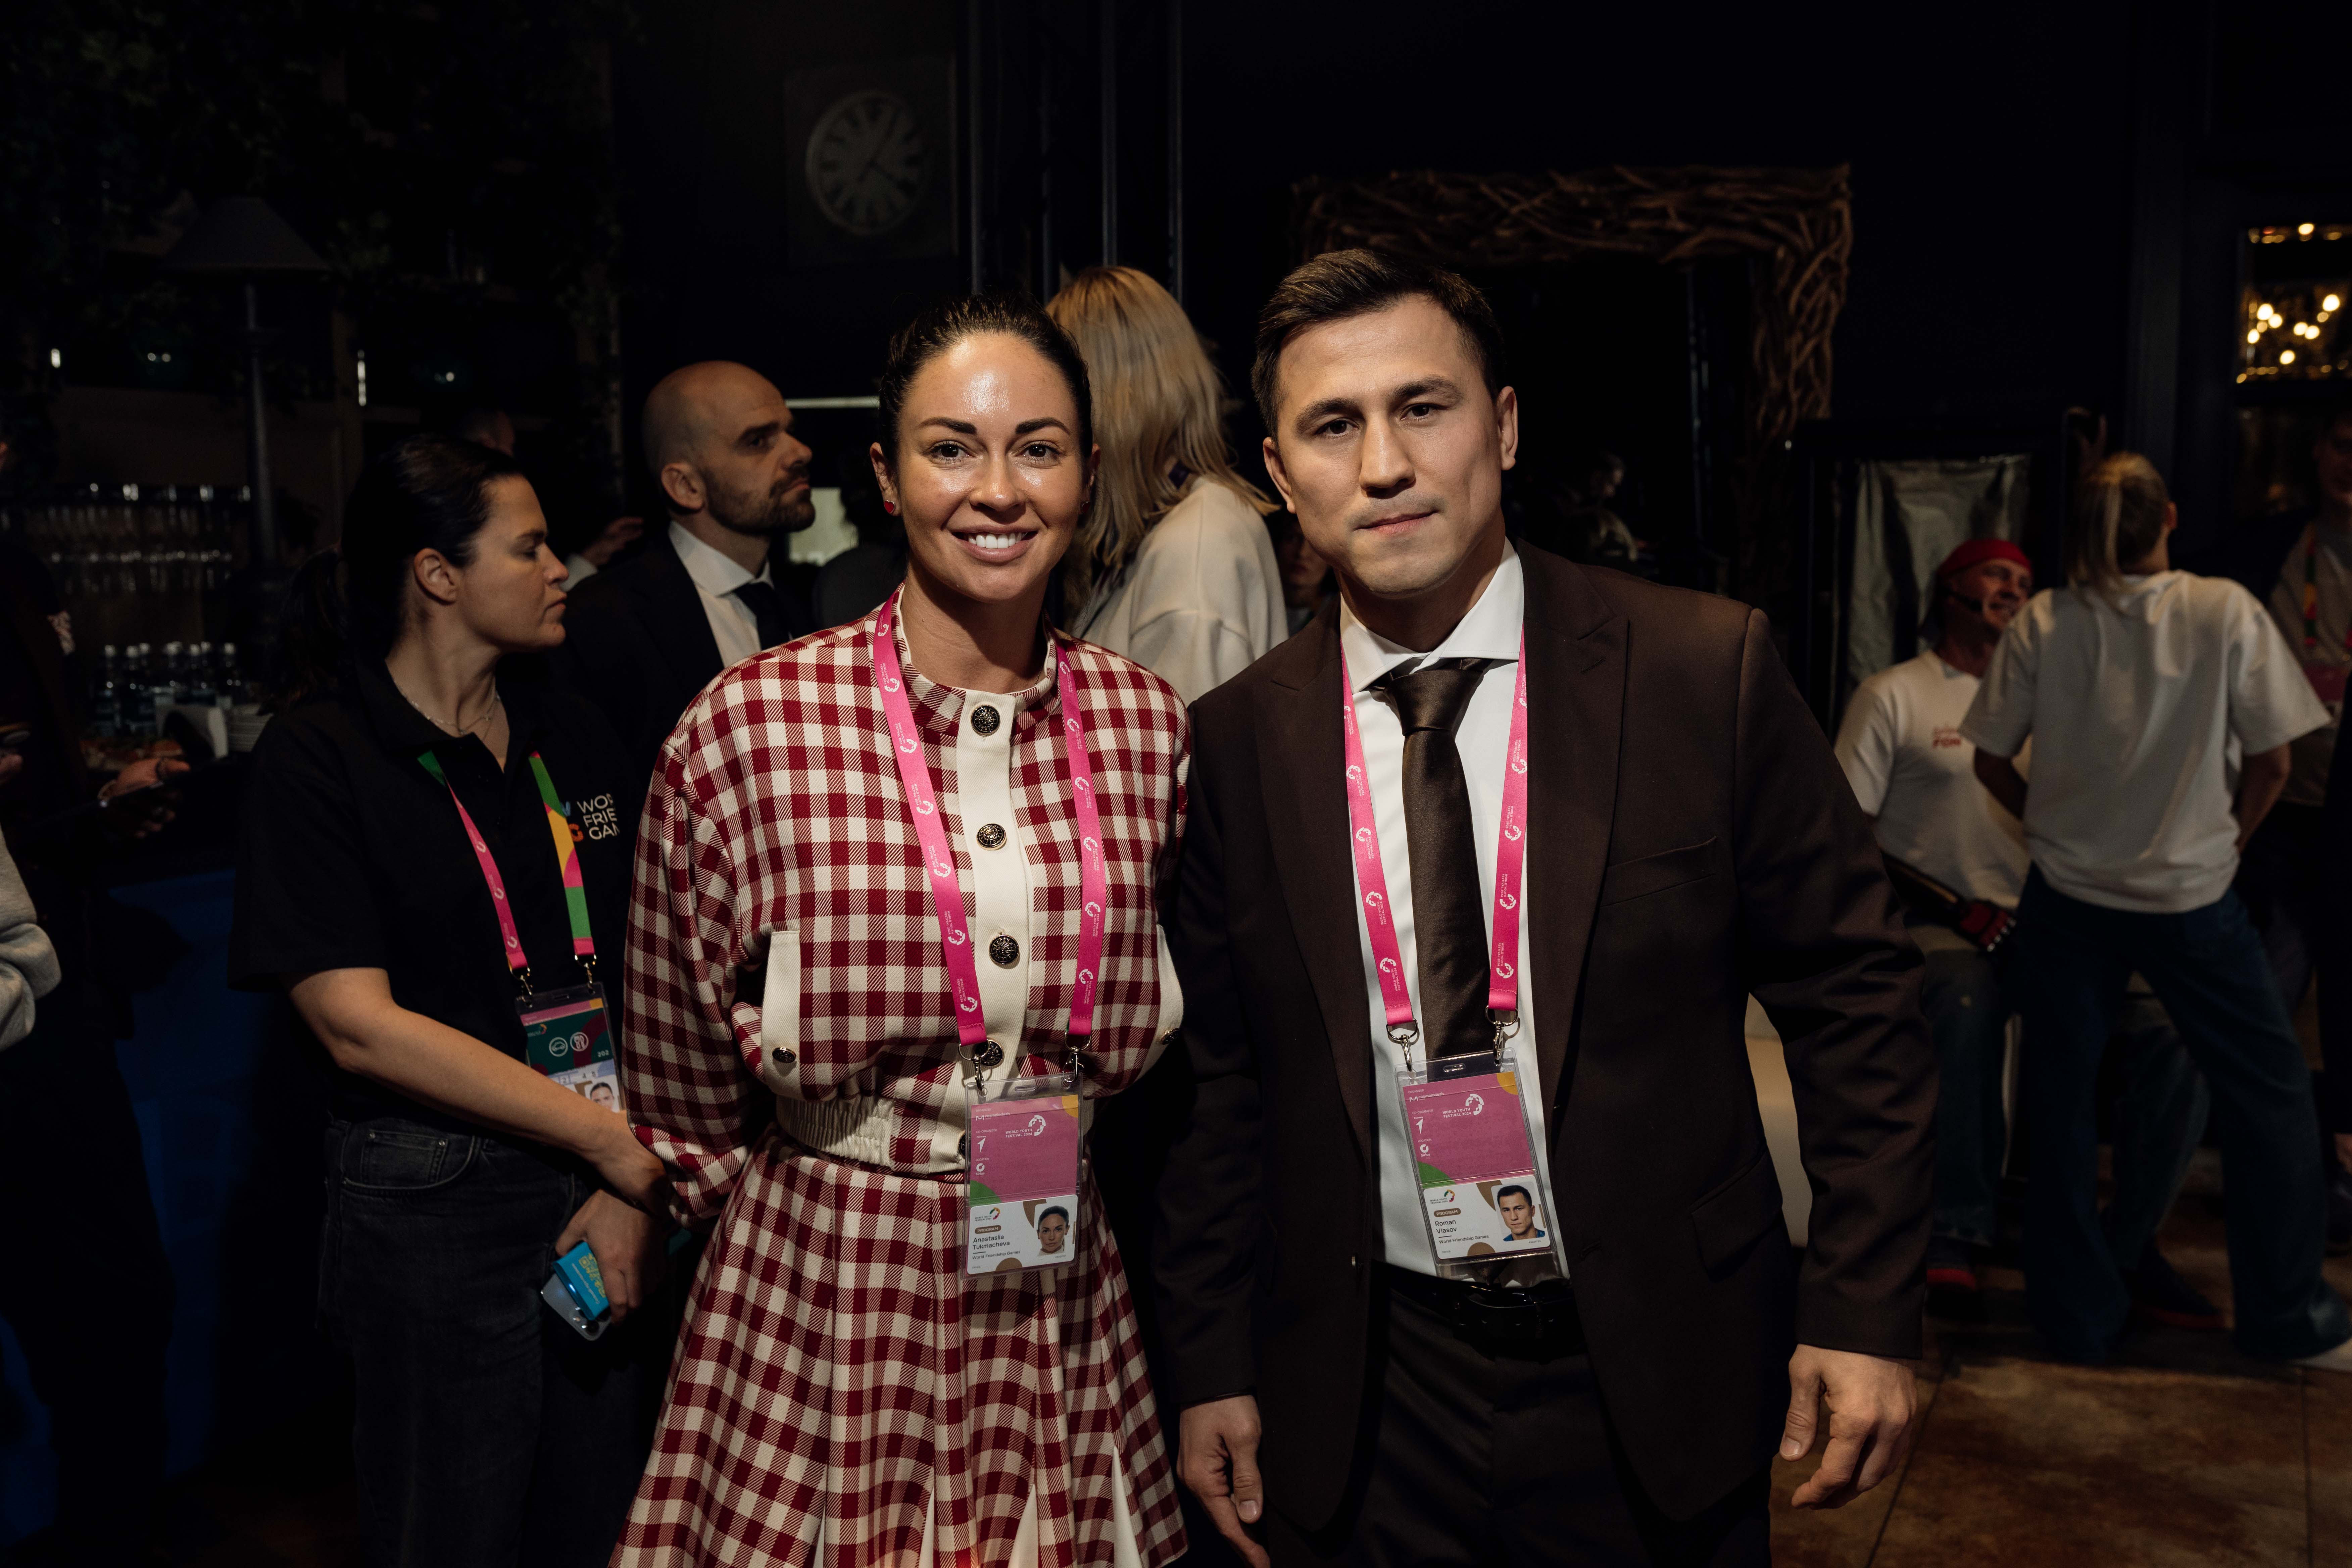 Roman Vlasov and Anastasia Tukmacheva became Ambassadors of the World Friendship Games 2024